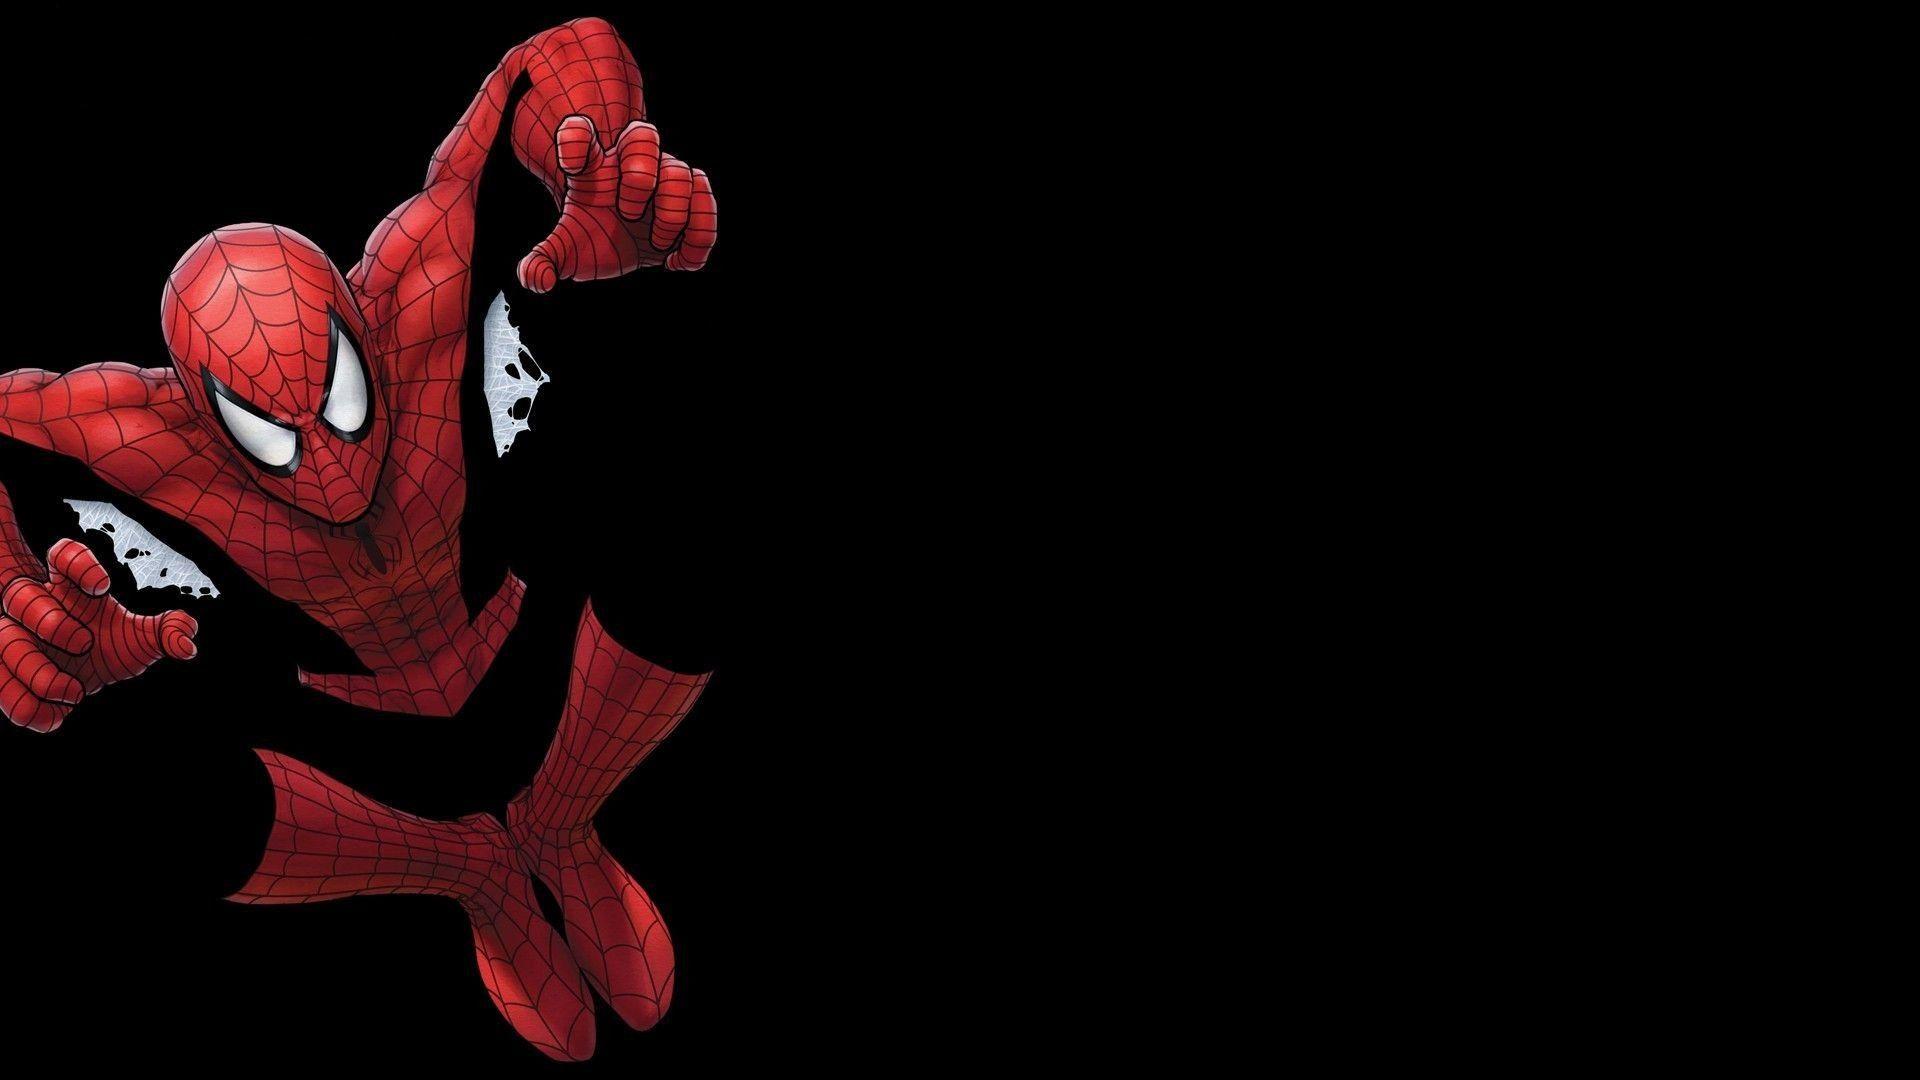 Comics: Spider Man Marvel Free Wallpaper 1920x1080 For HD 16:9